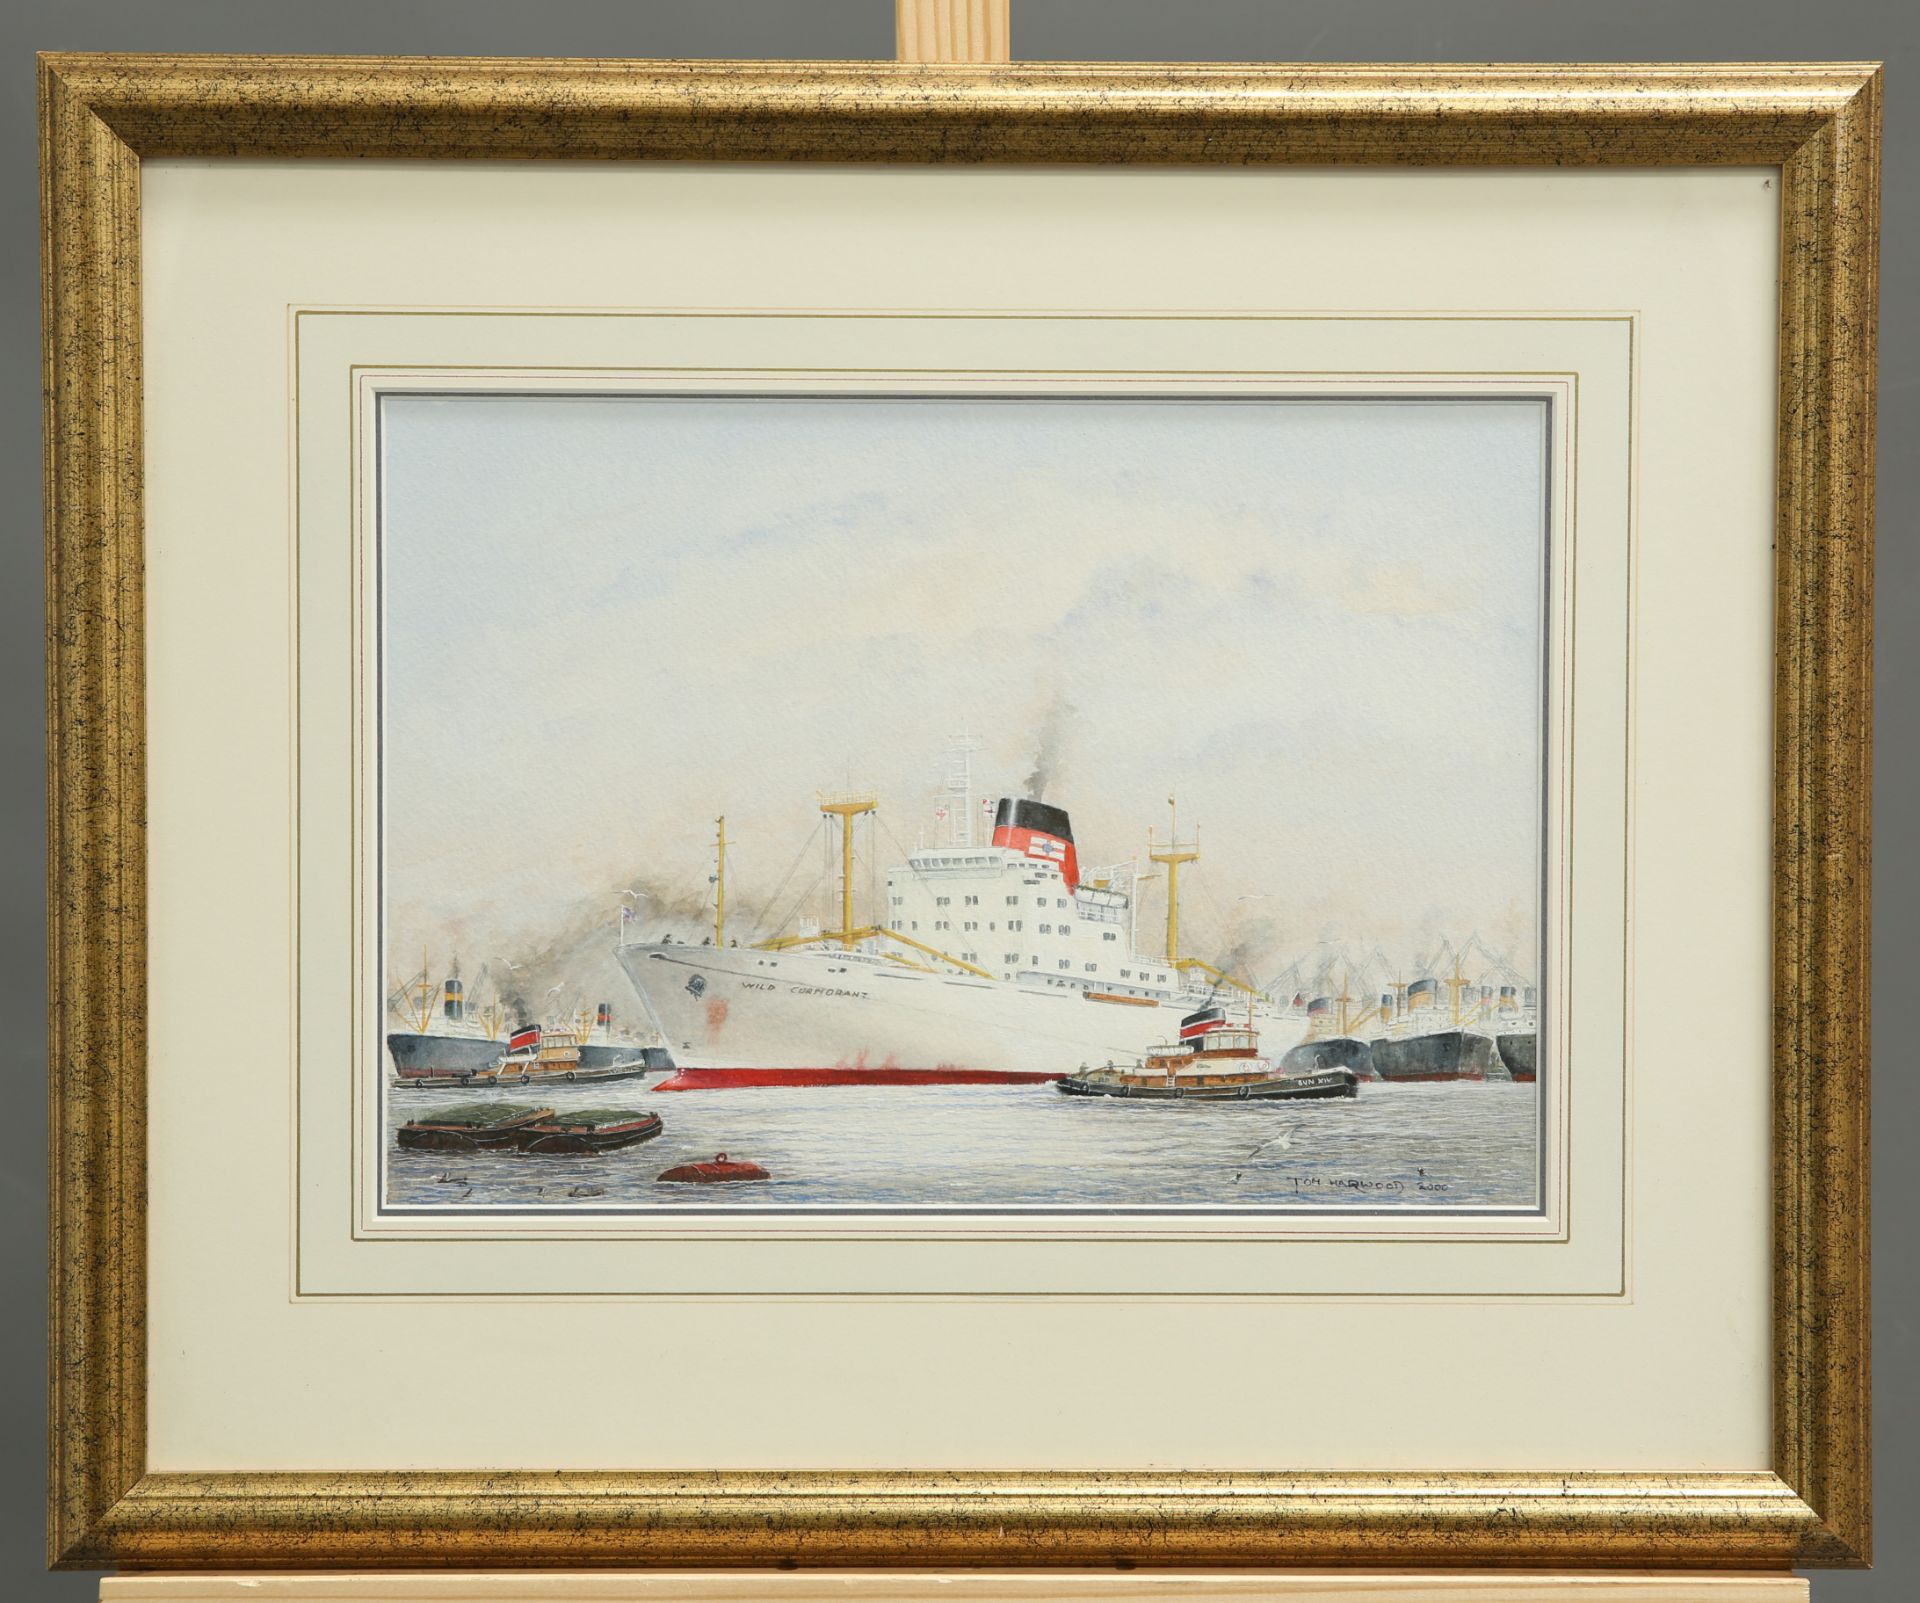 TOM HARWOOD (20TH CENTURY), CARGO SHIP, THE ‘WILD CORMORANT’ - Image 2 of 2